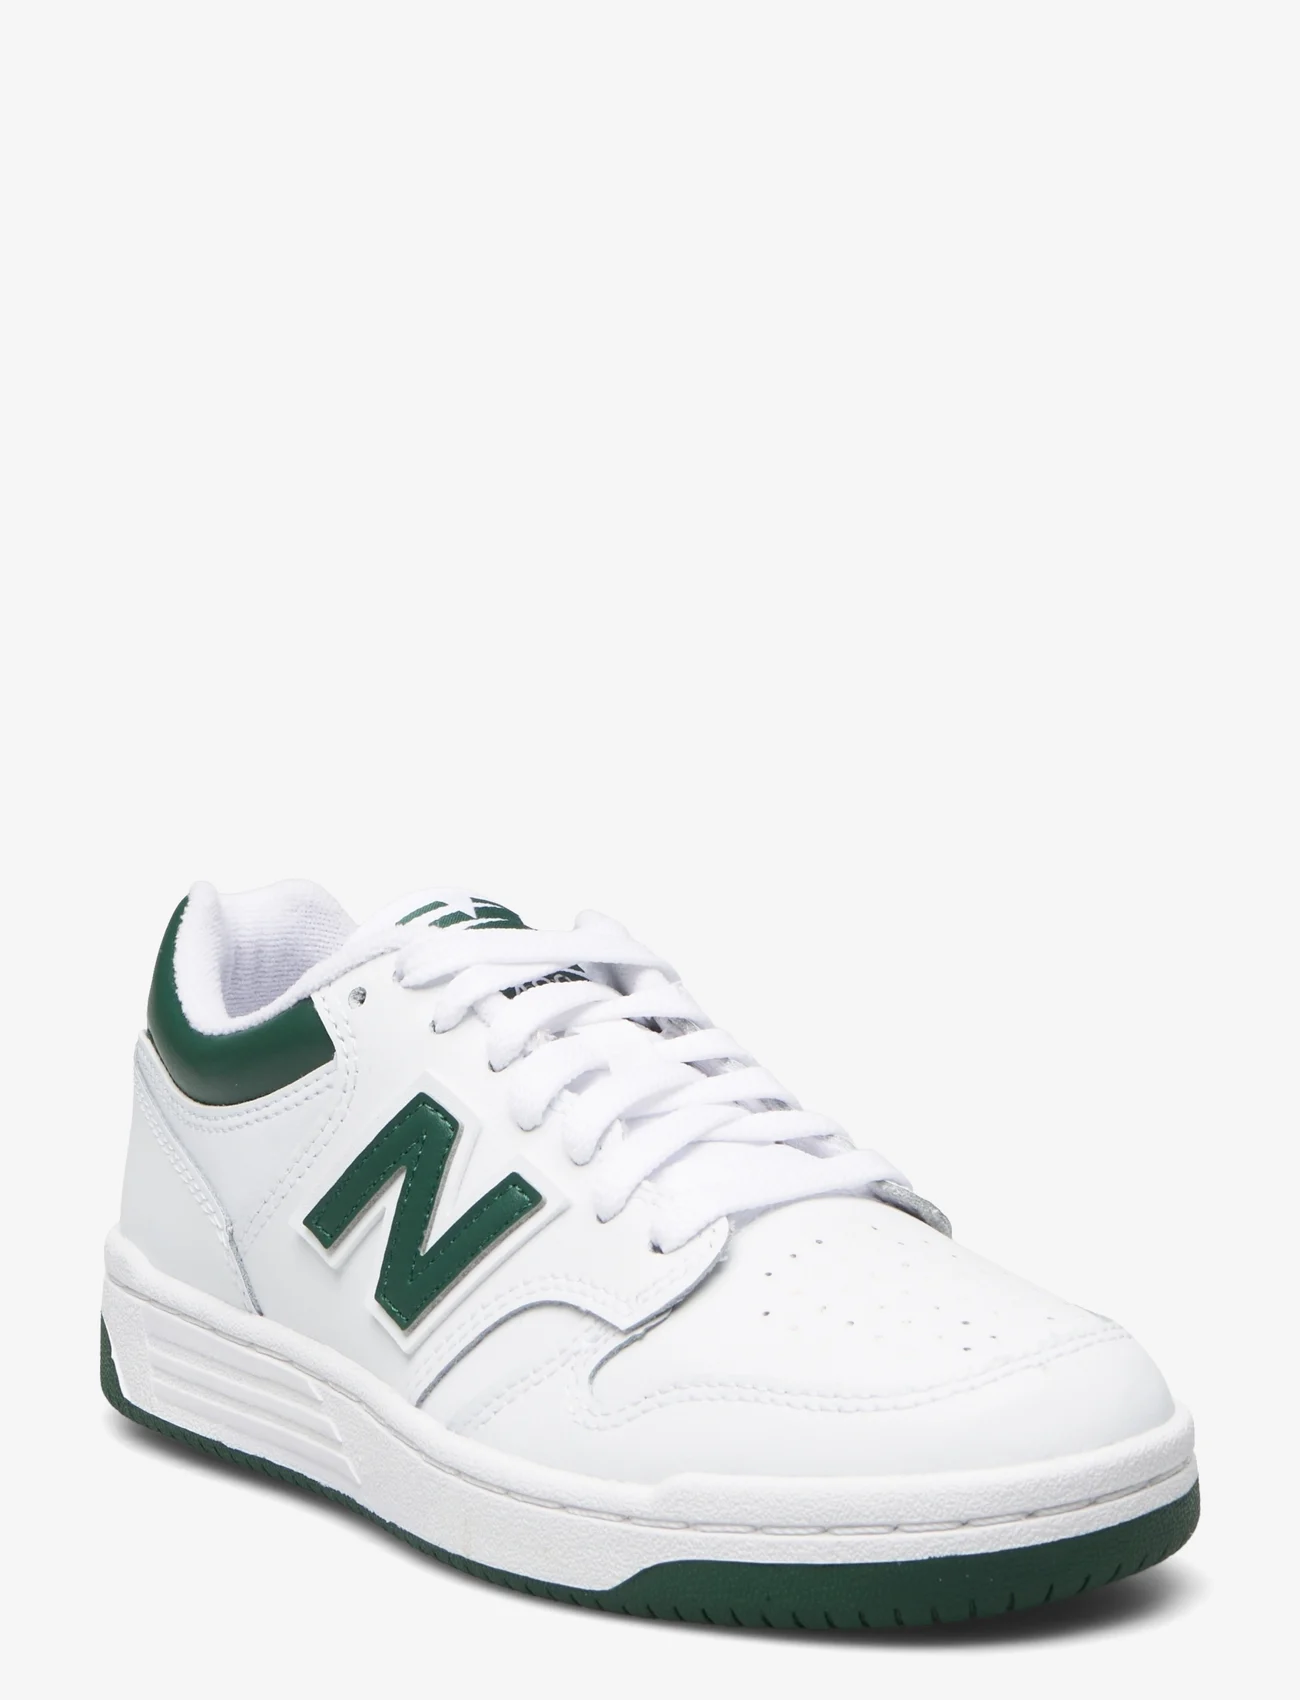 New Balance - New Balance BB480 - laag sneakers - white - 0